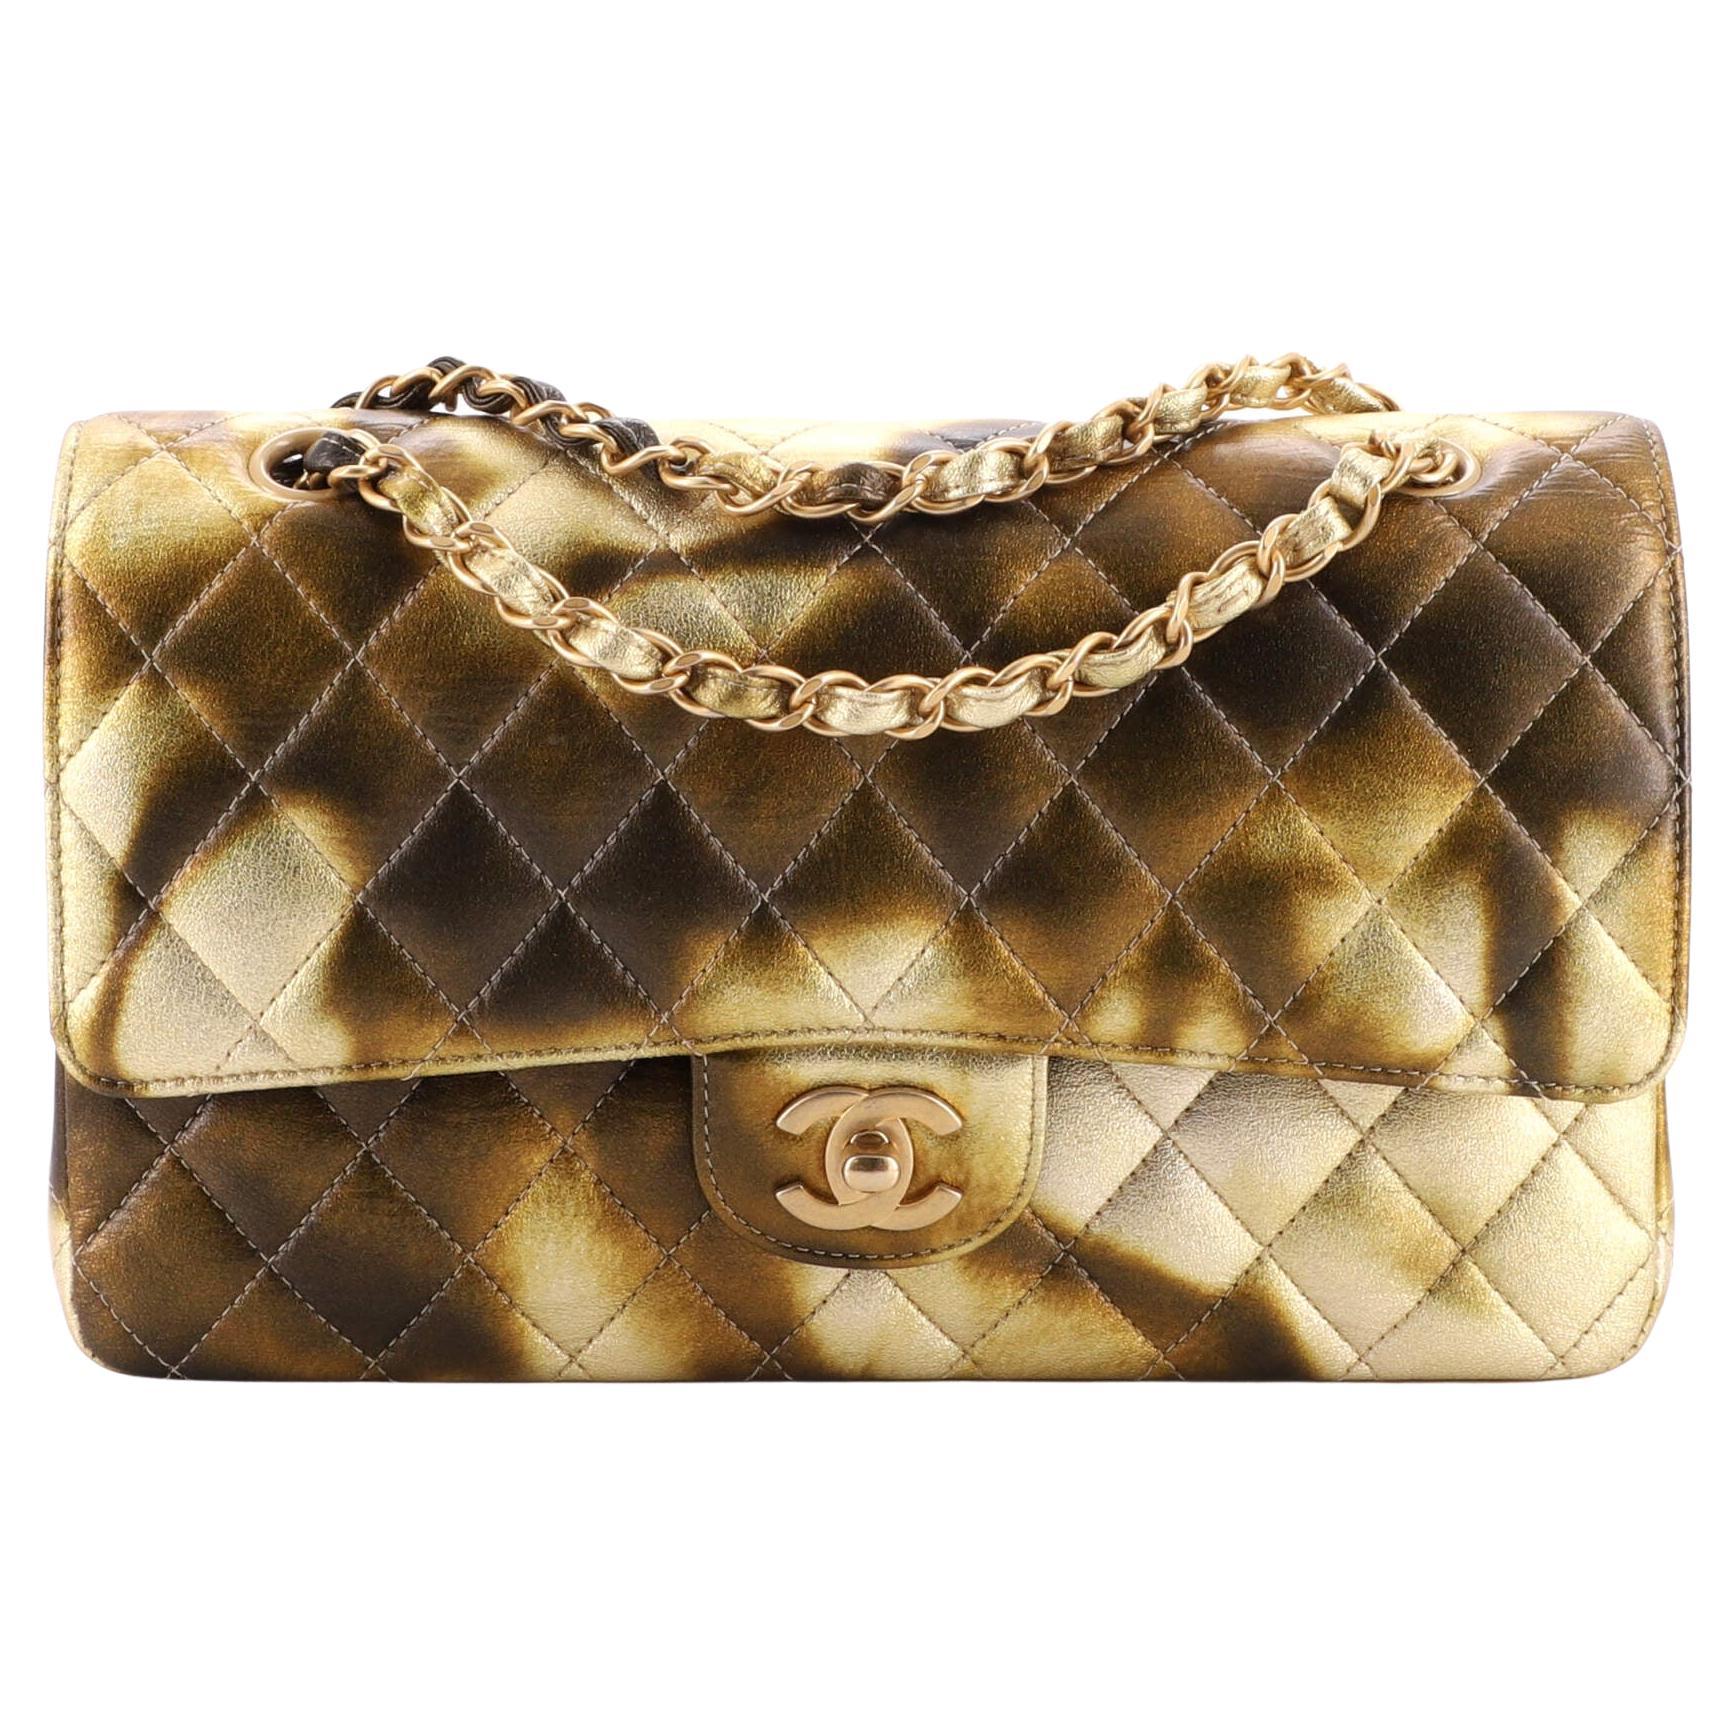 Chanel Rare Classic Single Flap Shoulder Bag